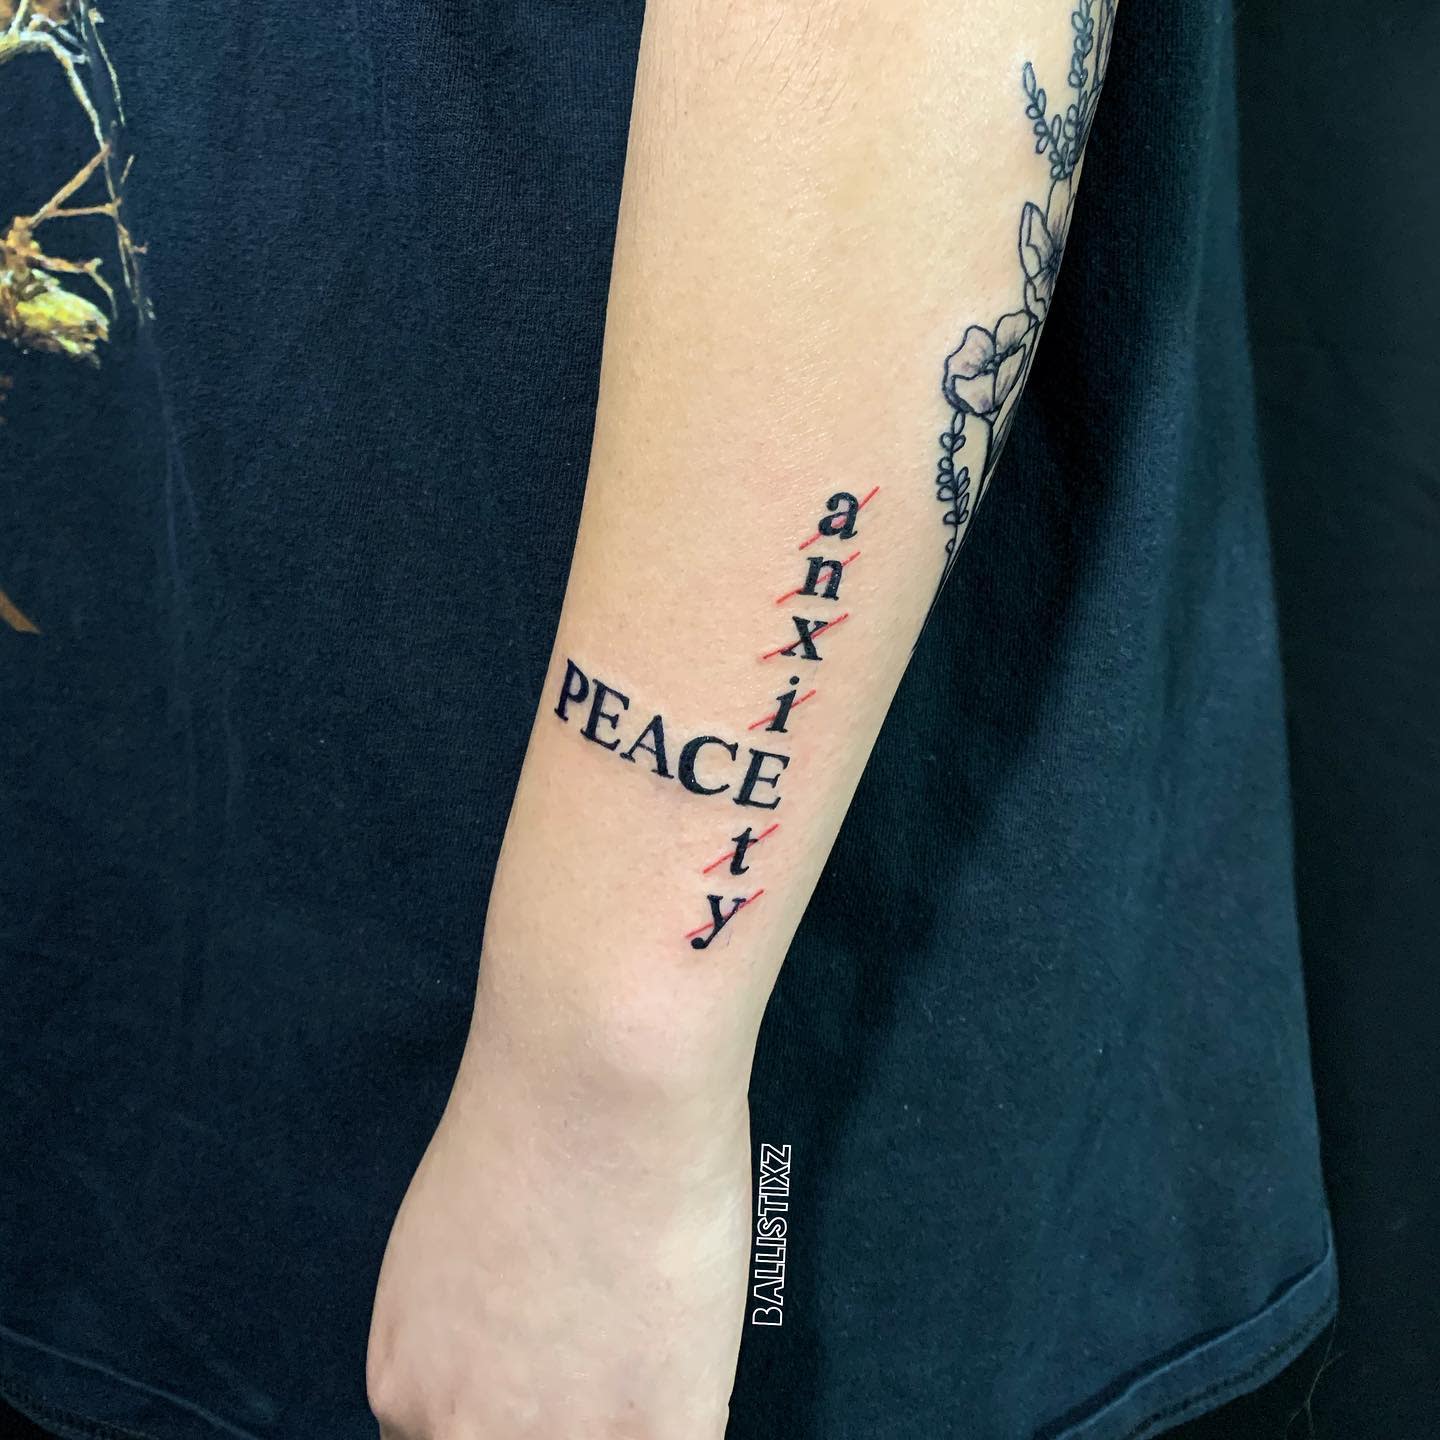 Tattoos that symbolize survival